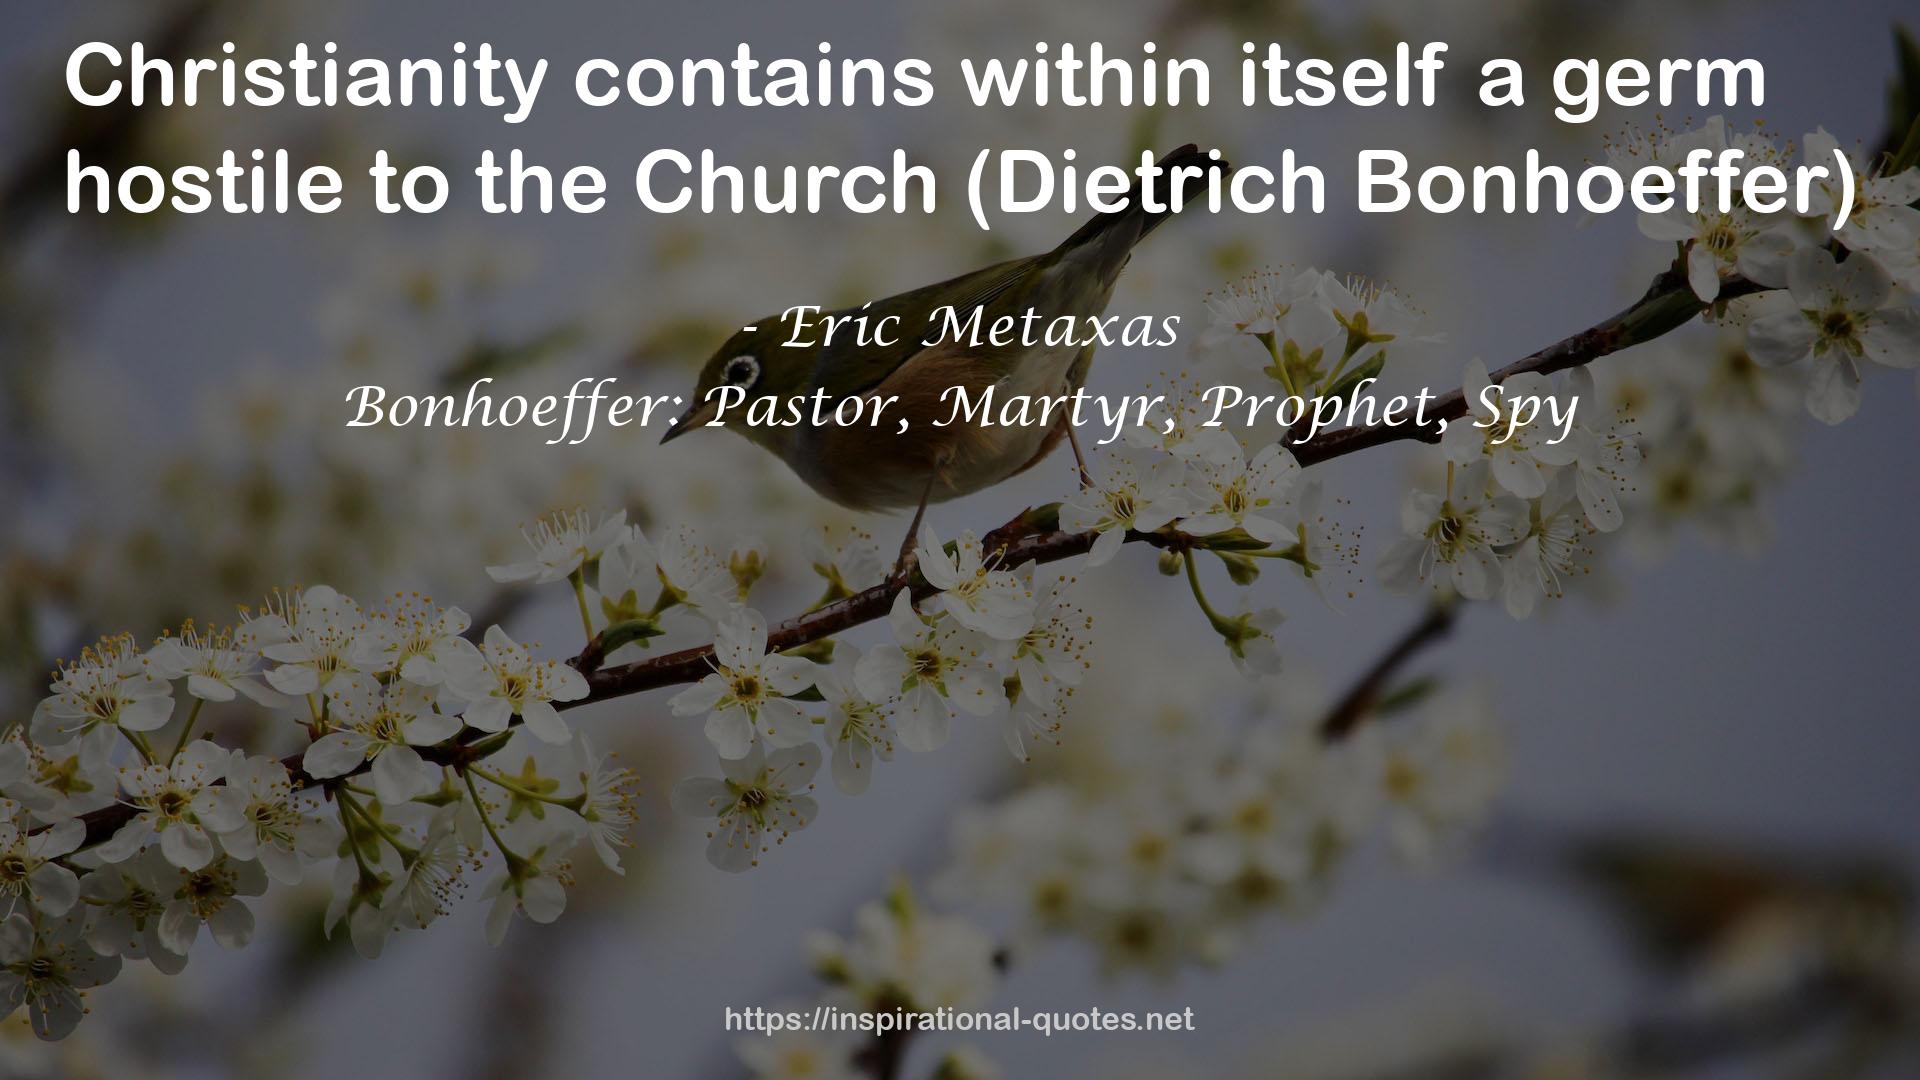 Bonhoeffer: Pastor, Martyr, Prophet, Spy QUOTES